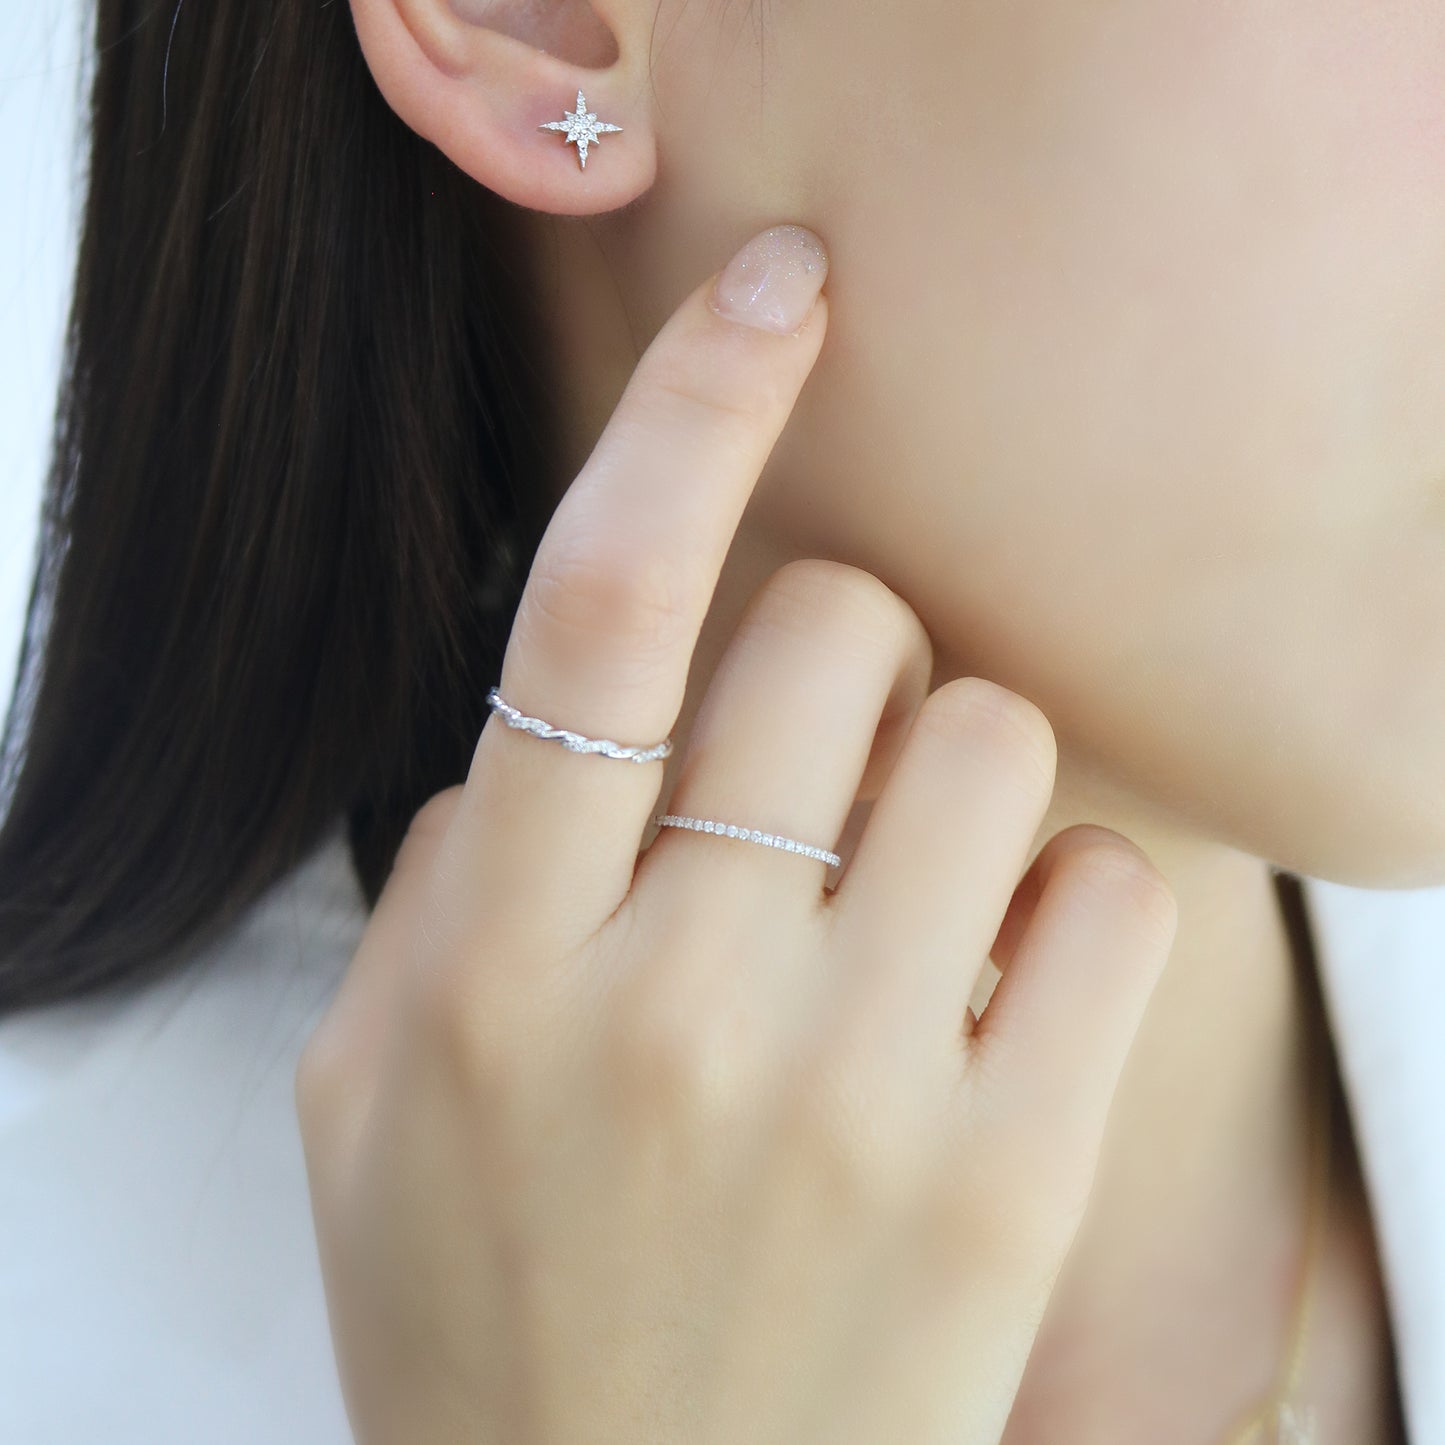 18k白金麻花扭紋鑽石戒指在中指上18k White Gold Twisted Diamond Ring on middle finger